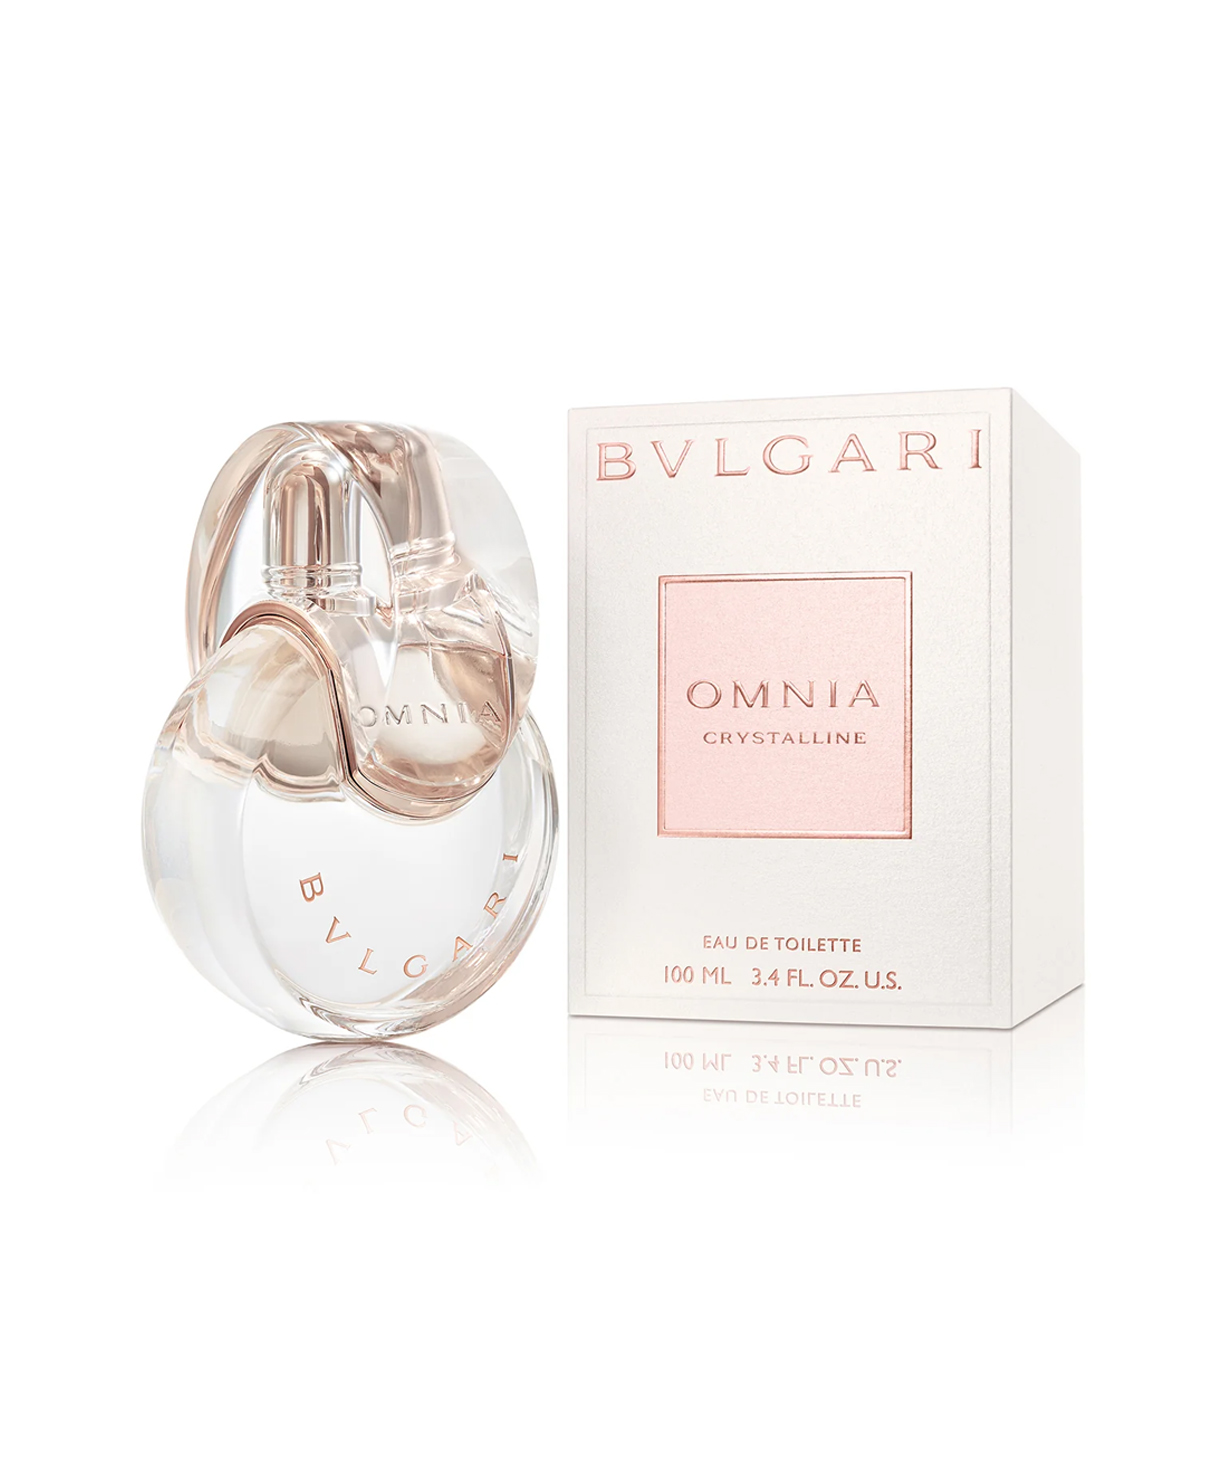 Perfume «Bvlgari» Omnia Crystalline, for women, 100 ml